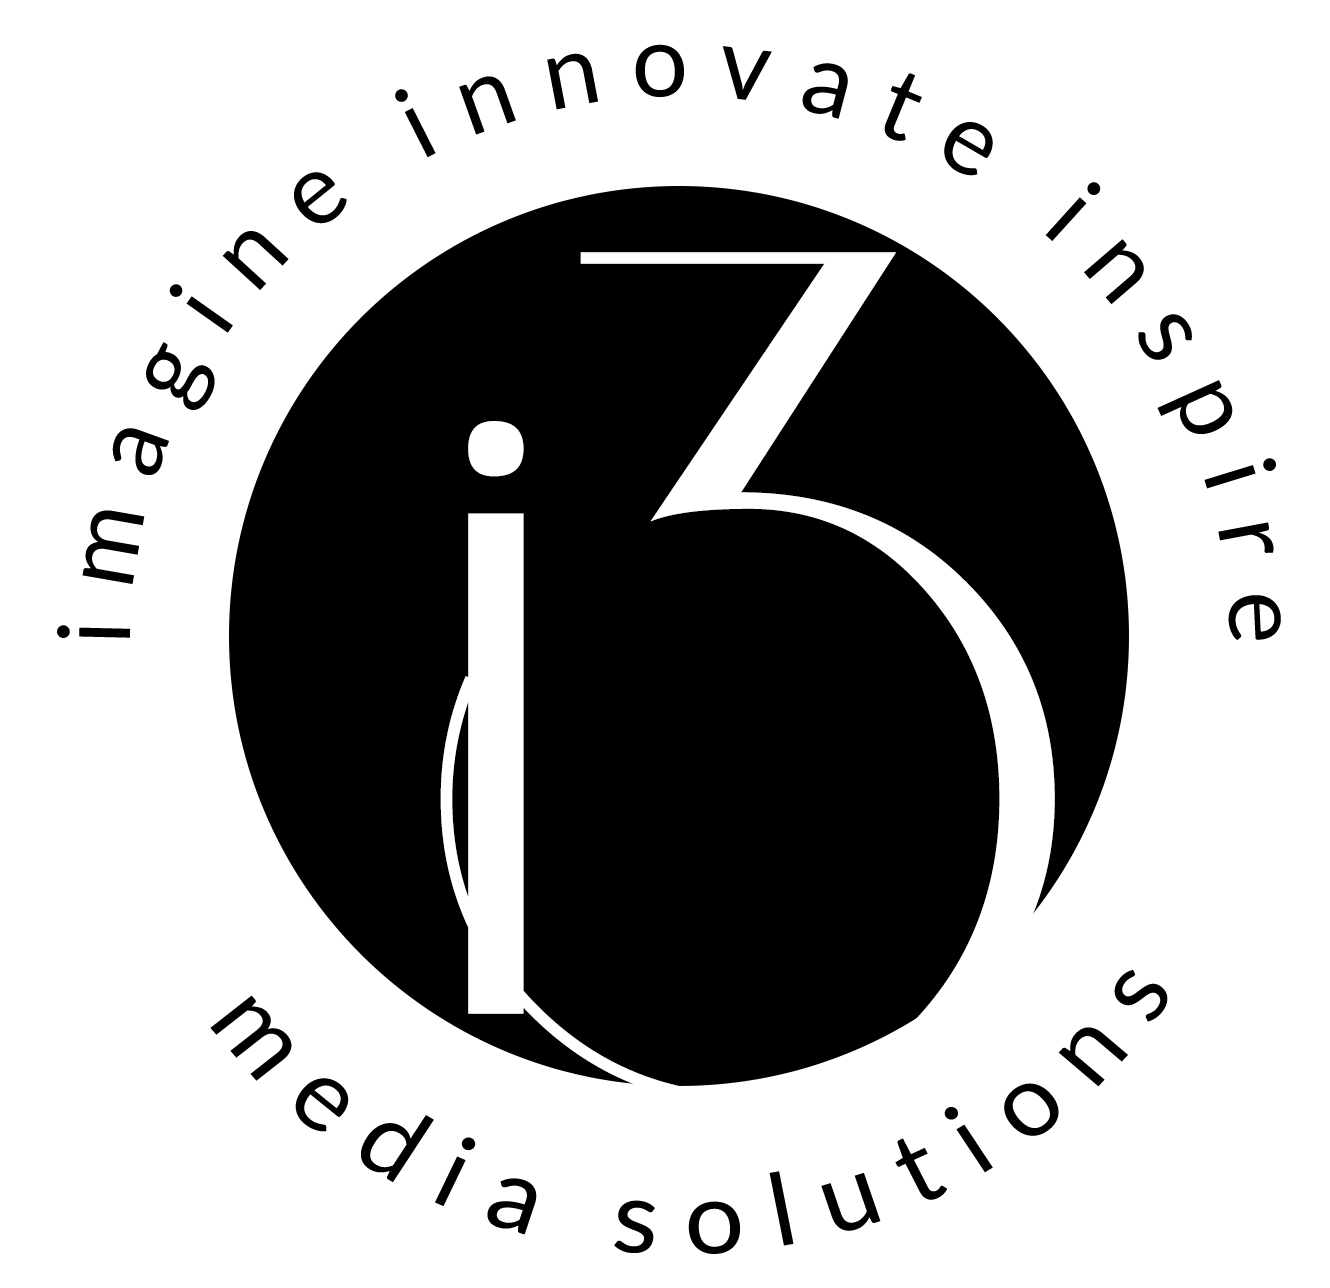 i3 media solutions logo image